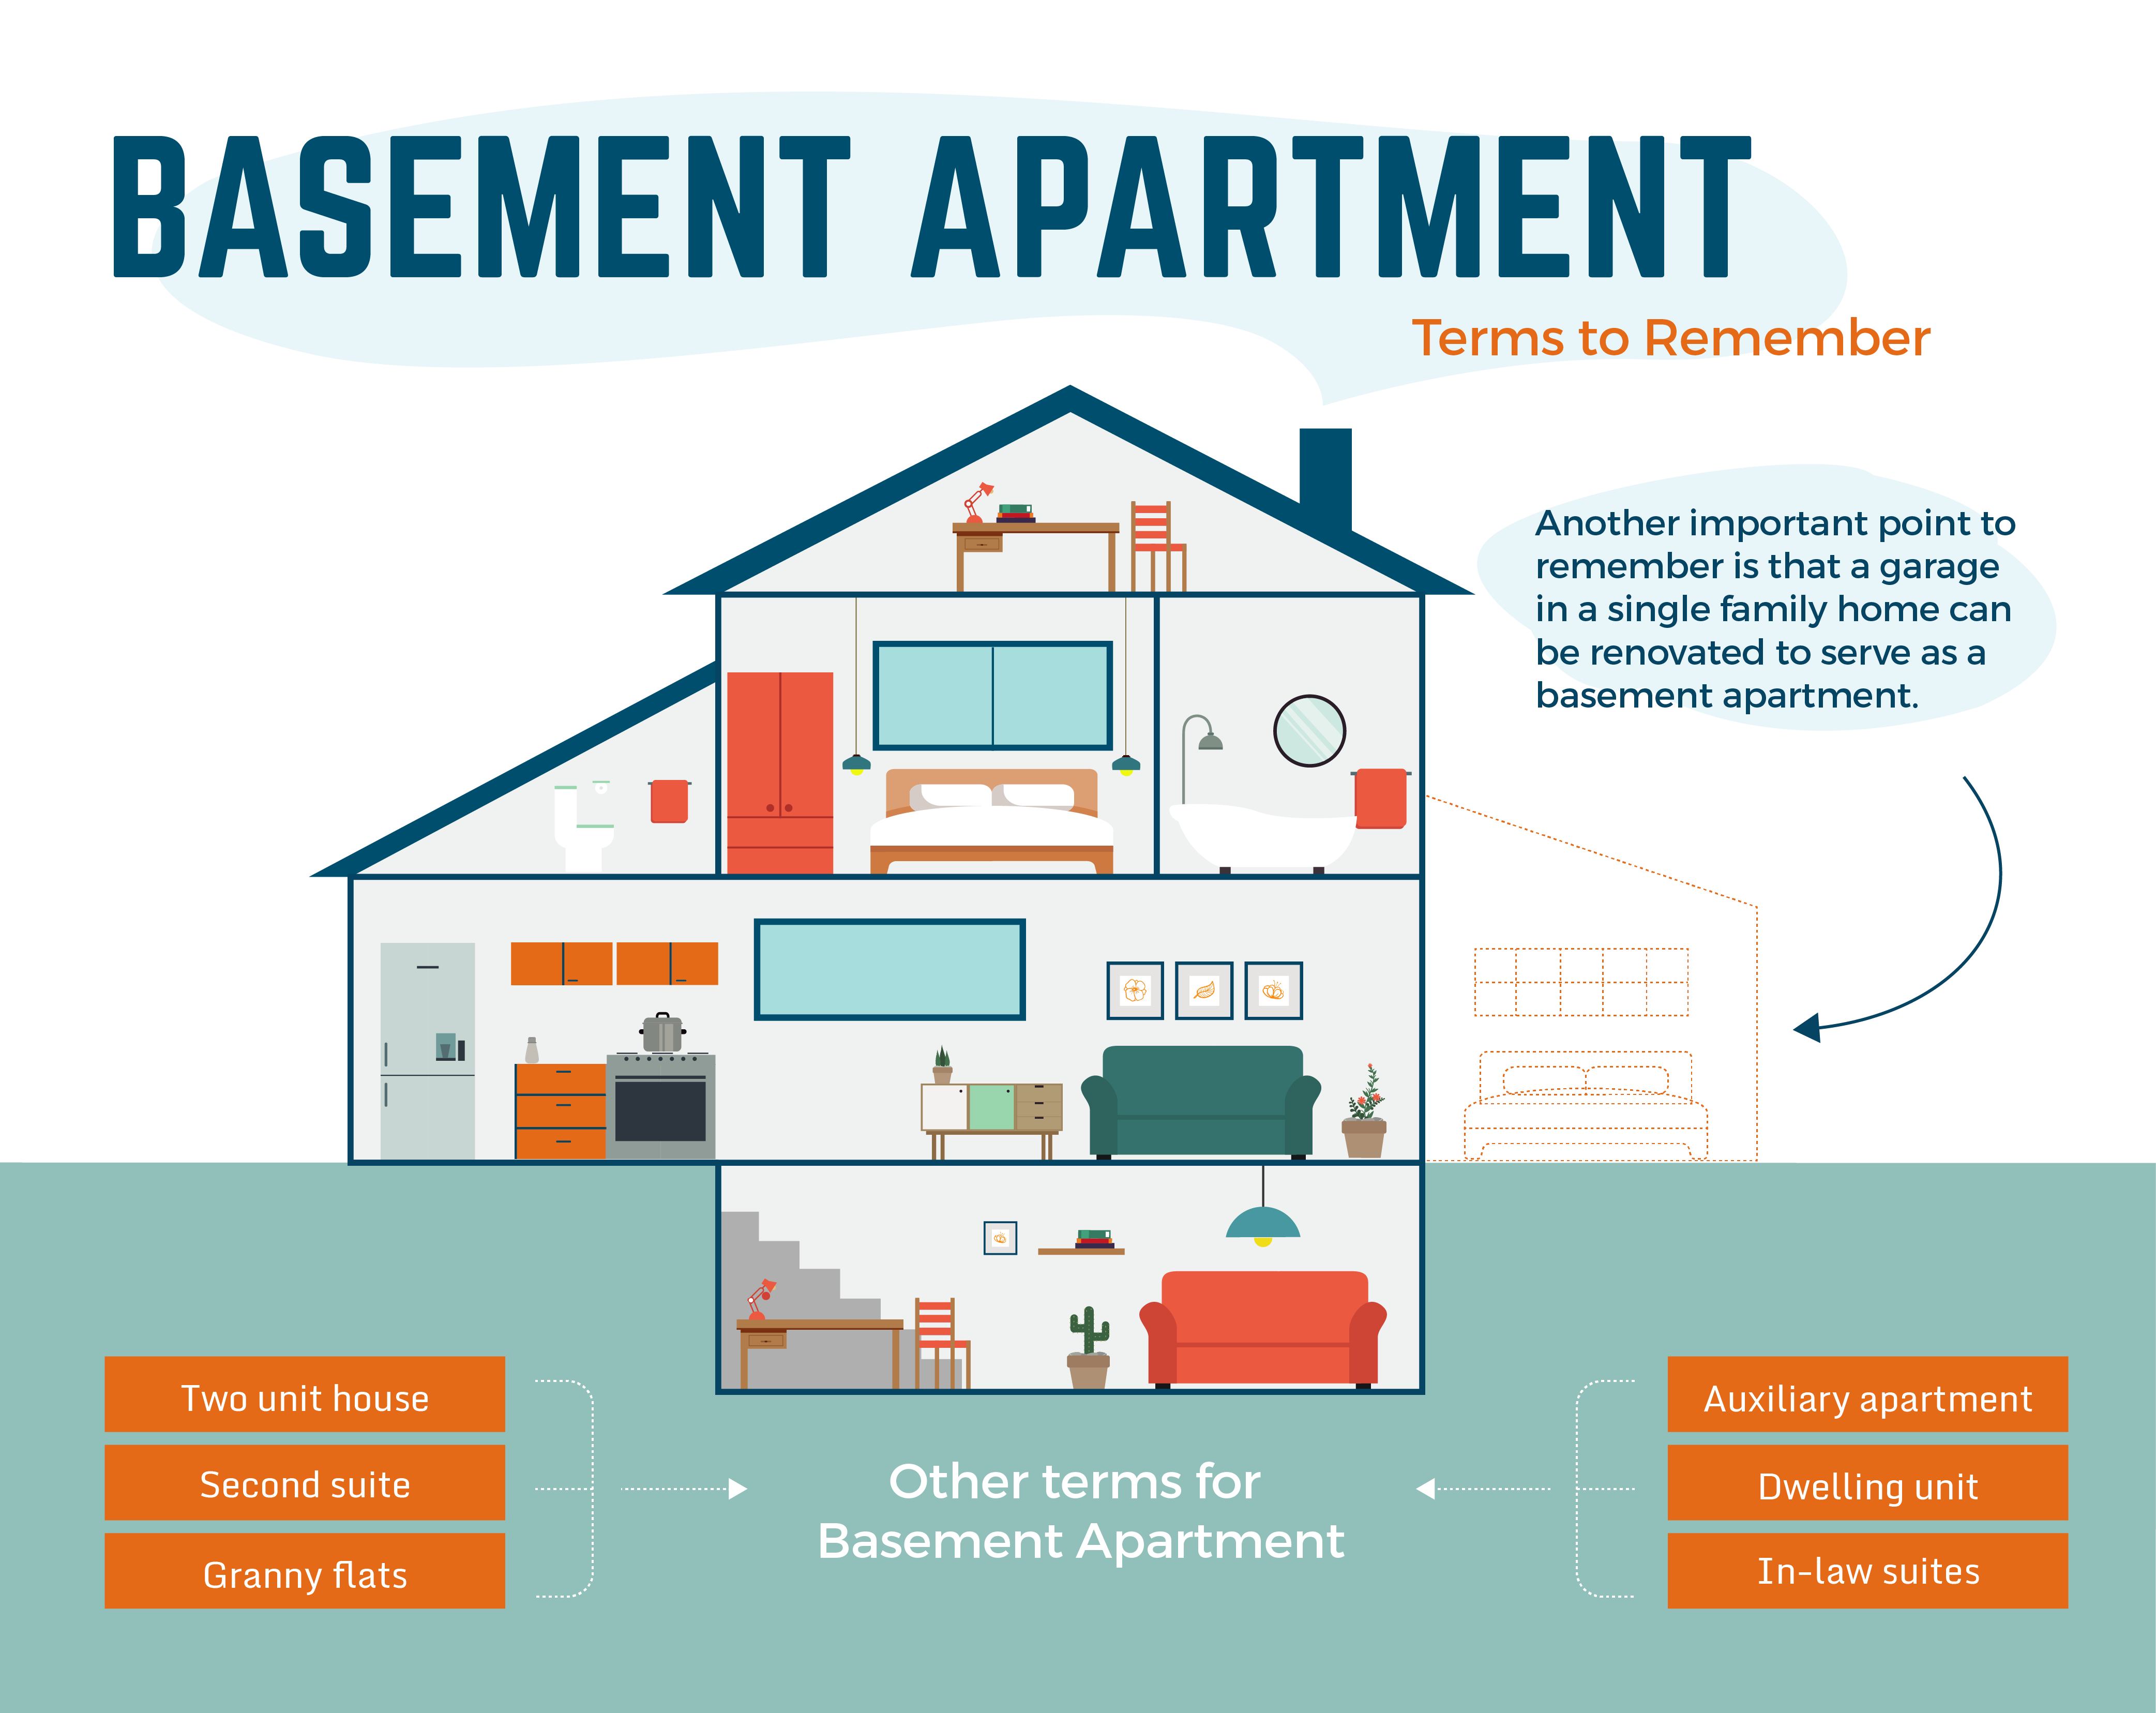 Toronto Basement Apartments Retrofit Doesn't Mean Legal